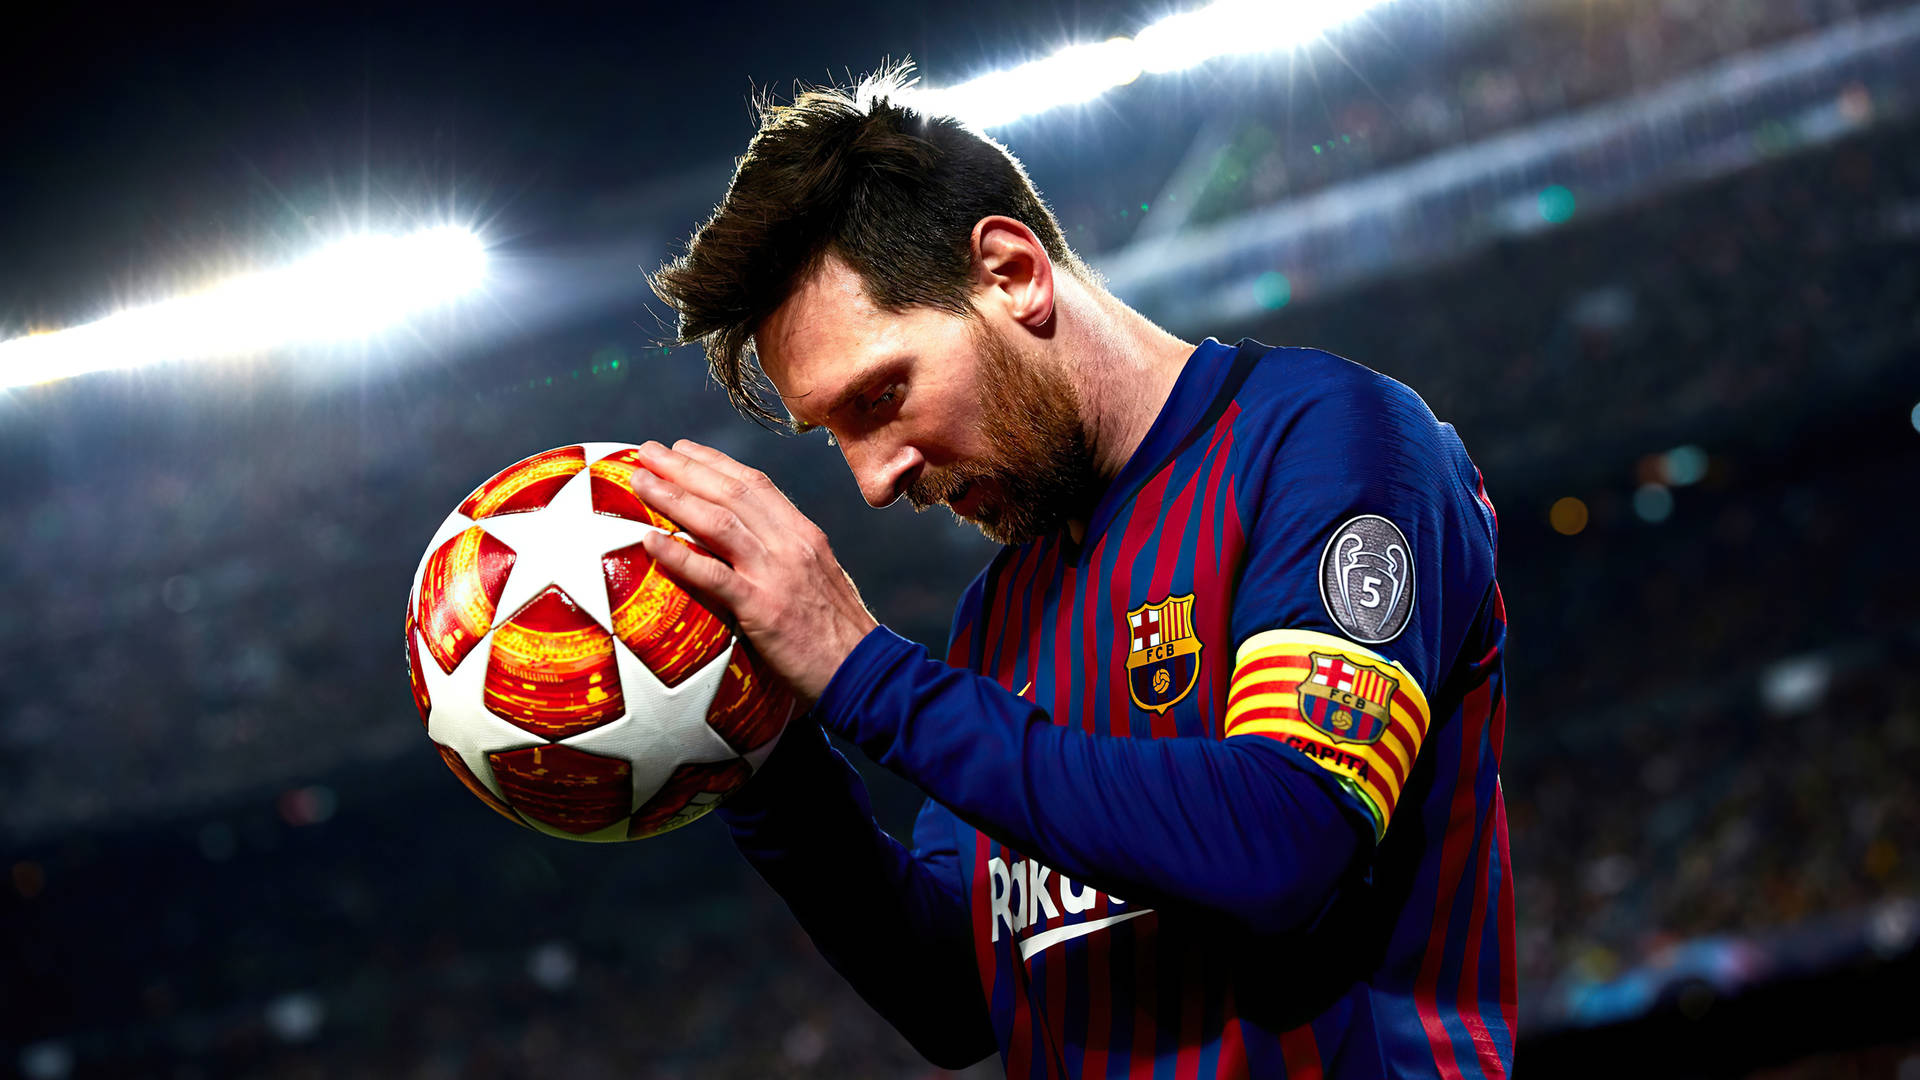 Messi 2021 UCL Captain Wallpaper